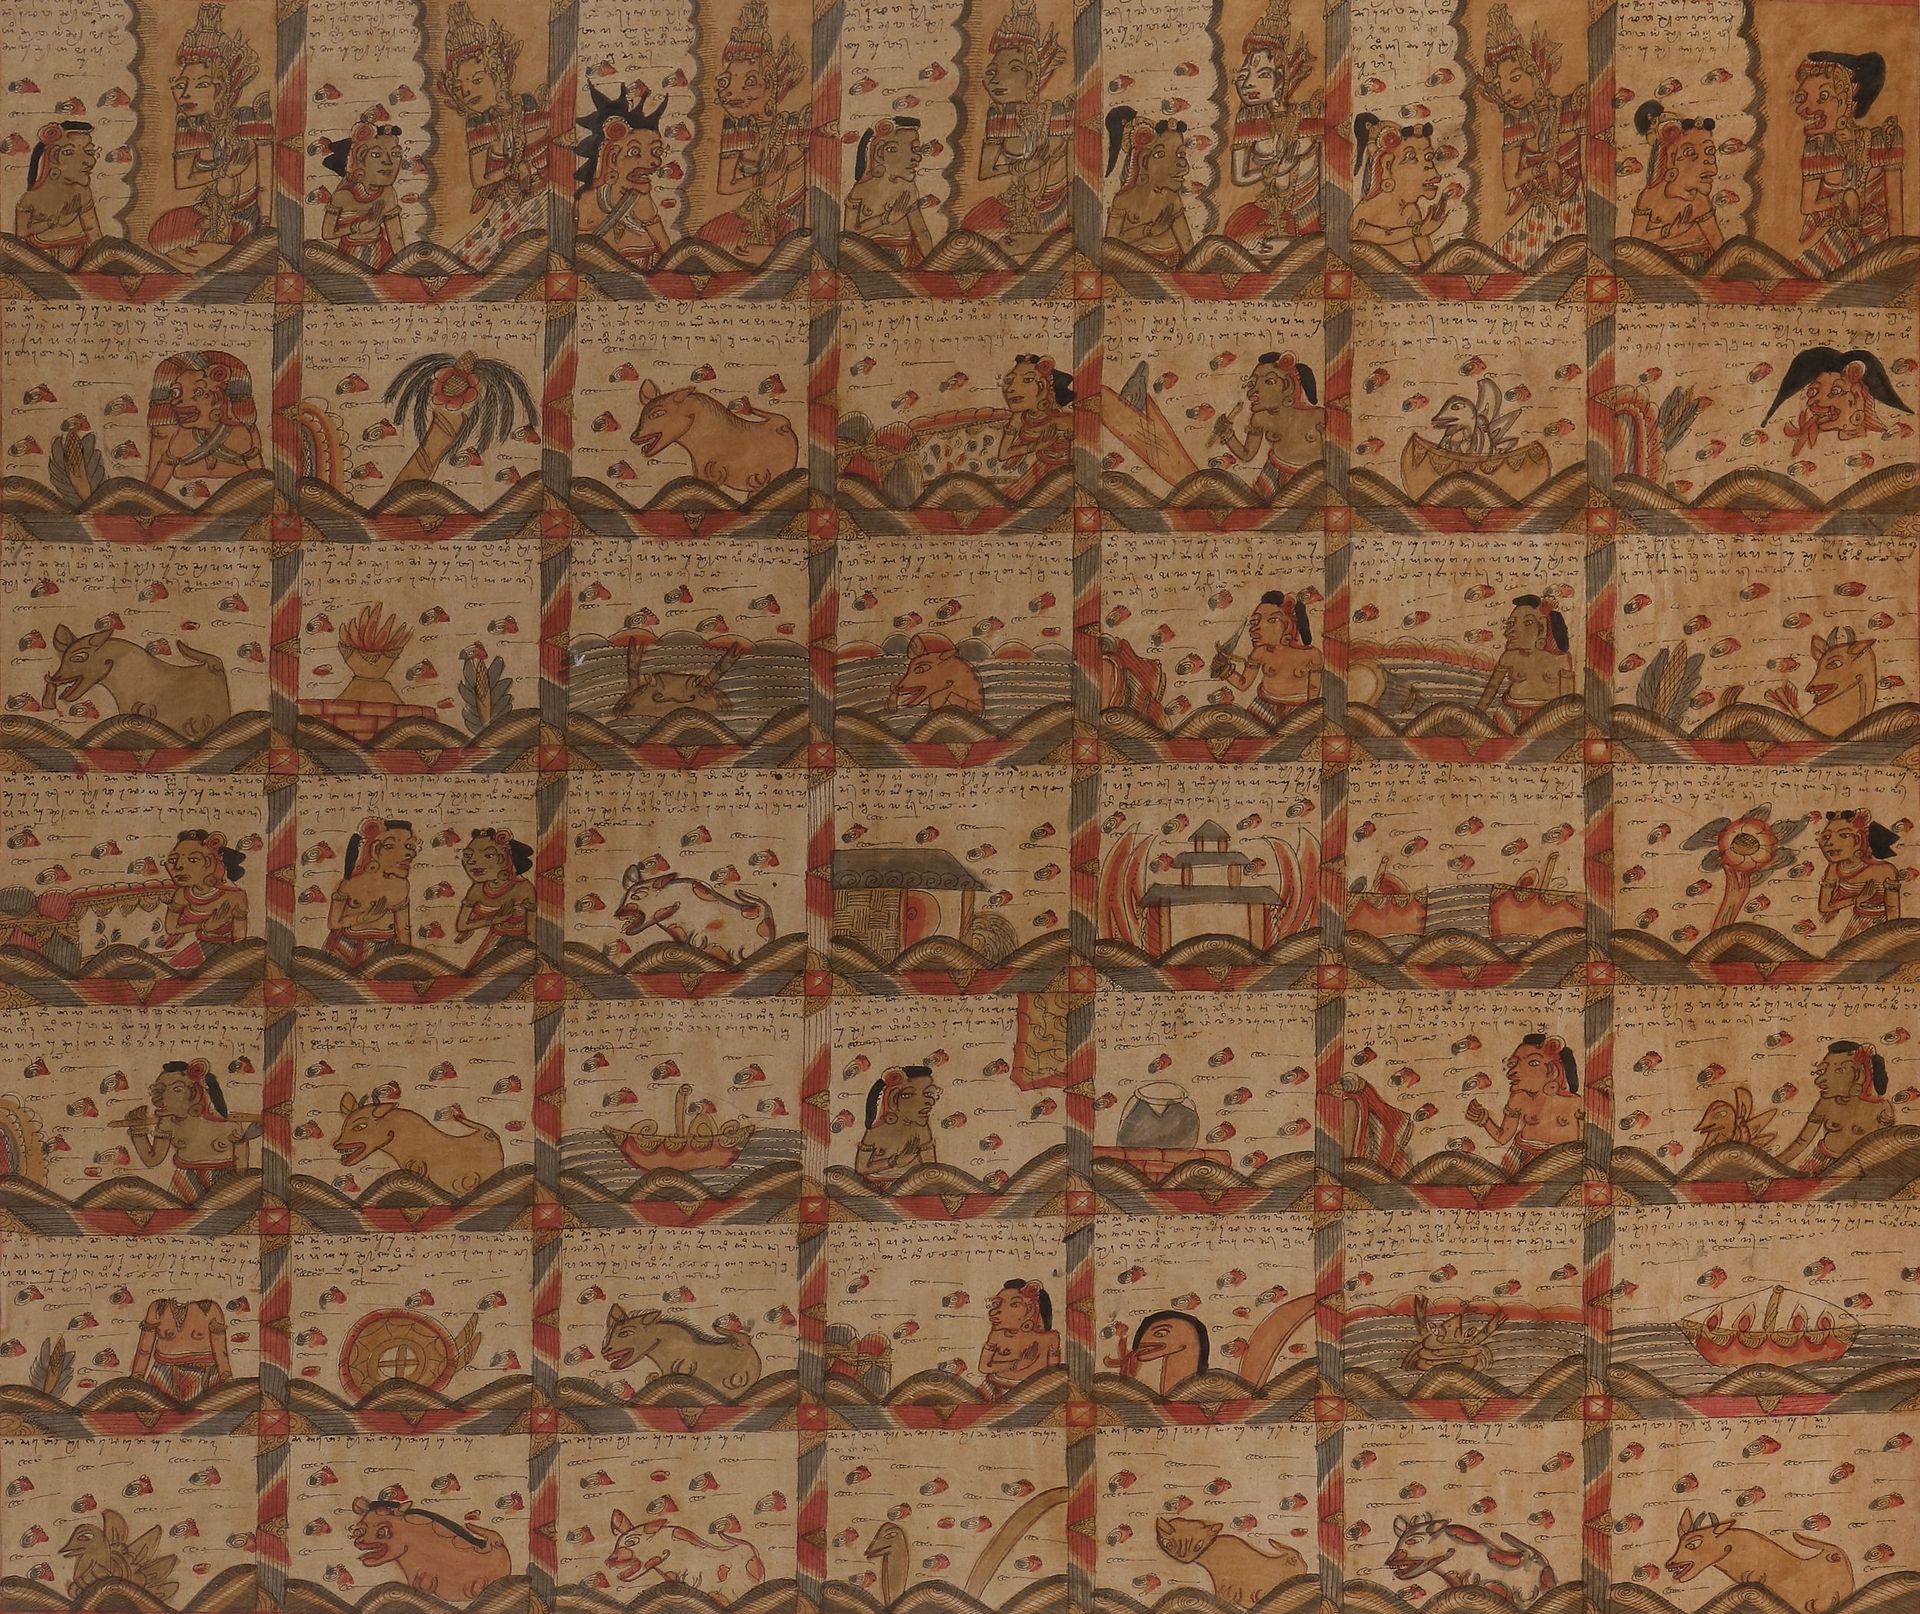 Null Palelintangan (astrologischer Kalender), Bali, 20. JahrhundertMalerei
auf T&hellip;